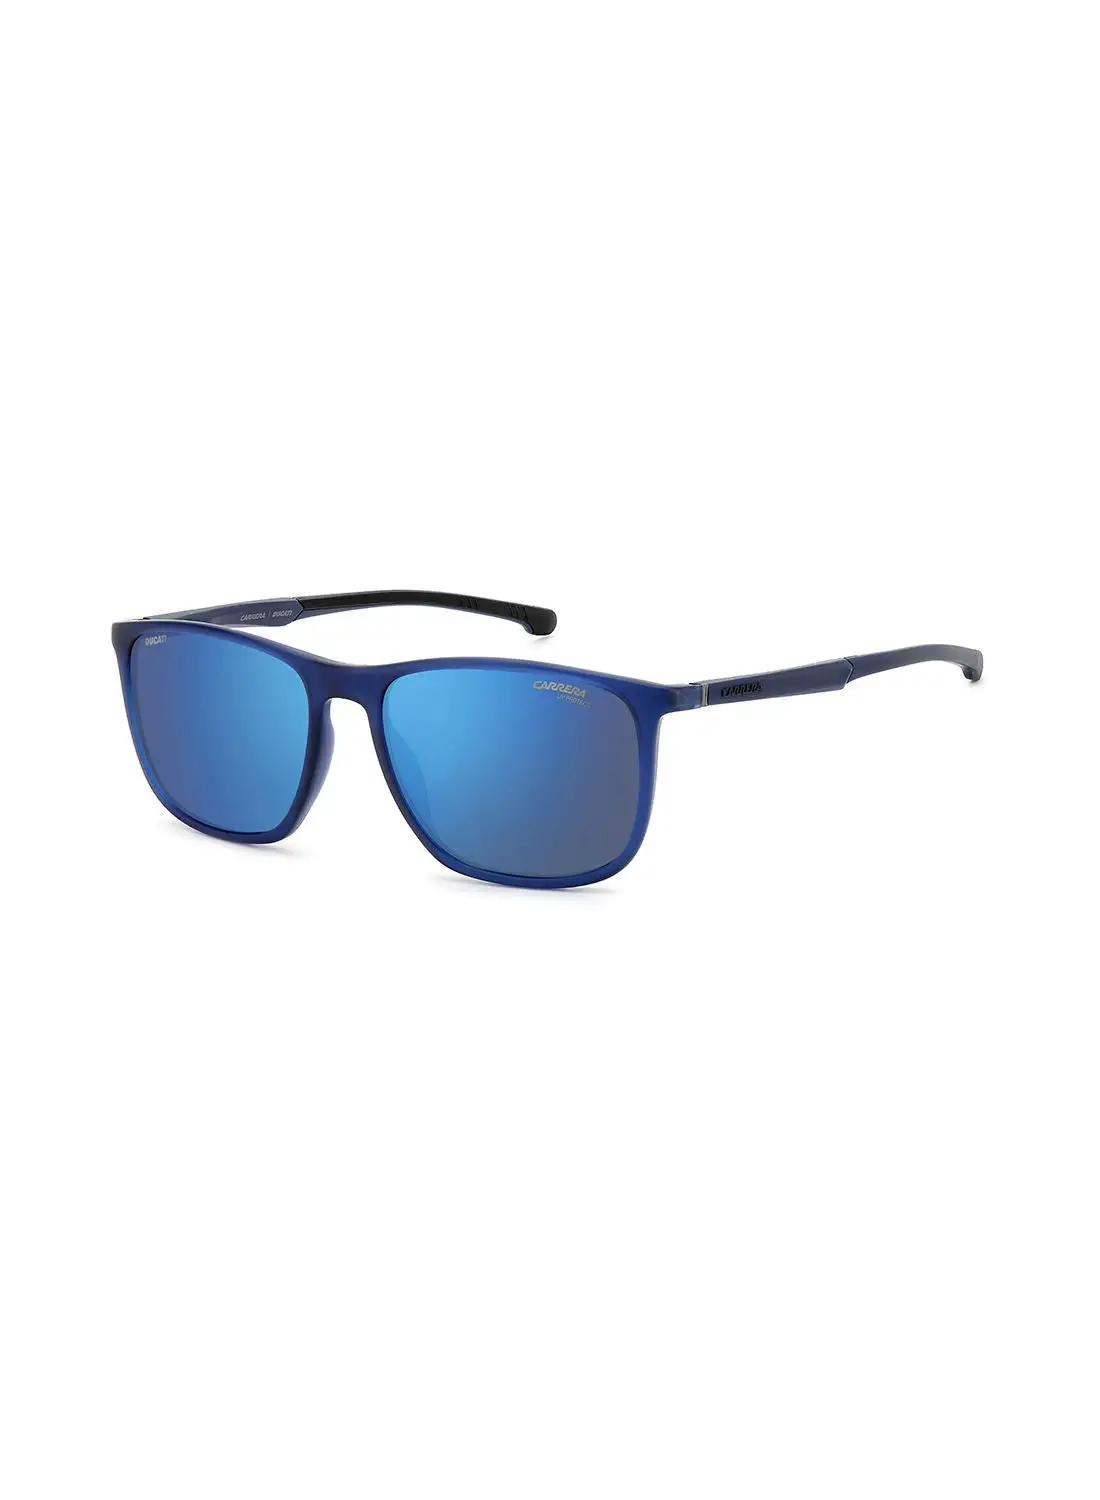 Carrera Men's UV Protection Rectangular Sunglasses - Carduc 004/S Blue 57 - Lens Size: 57 Mm